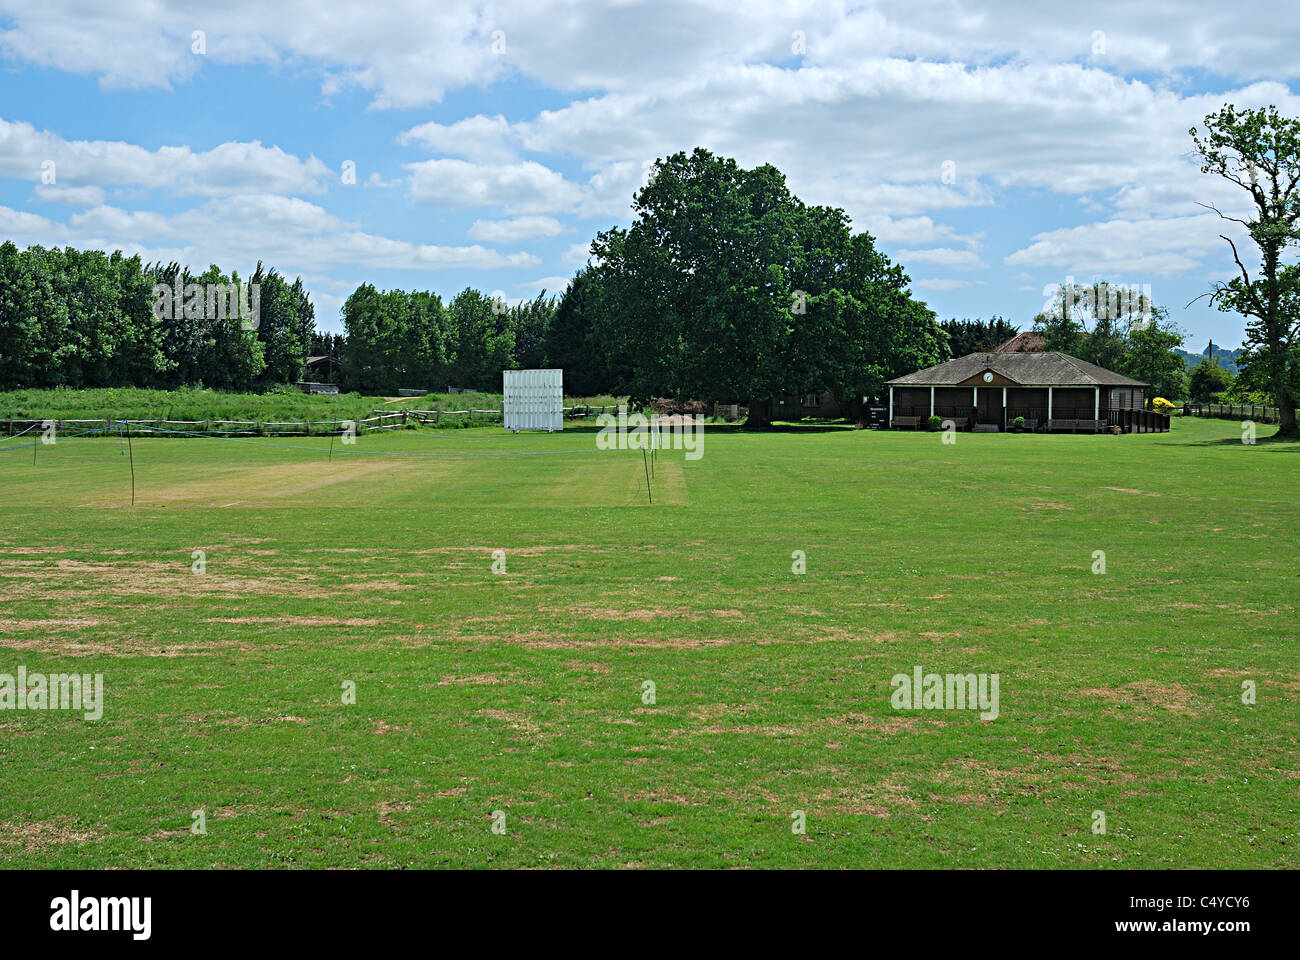 Newenden Cricket Pitch Stock Photo